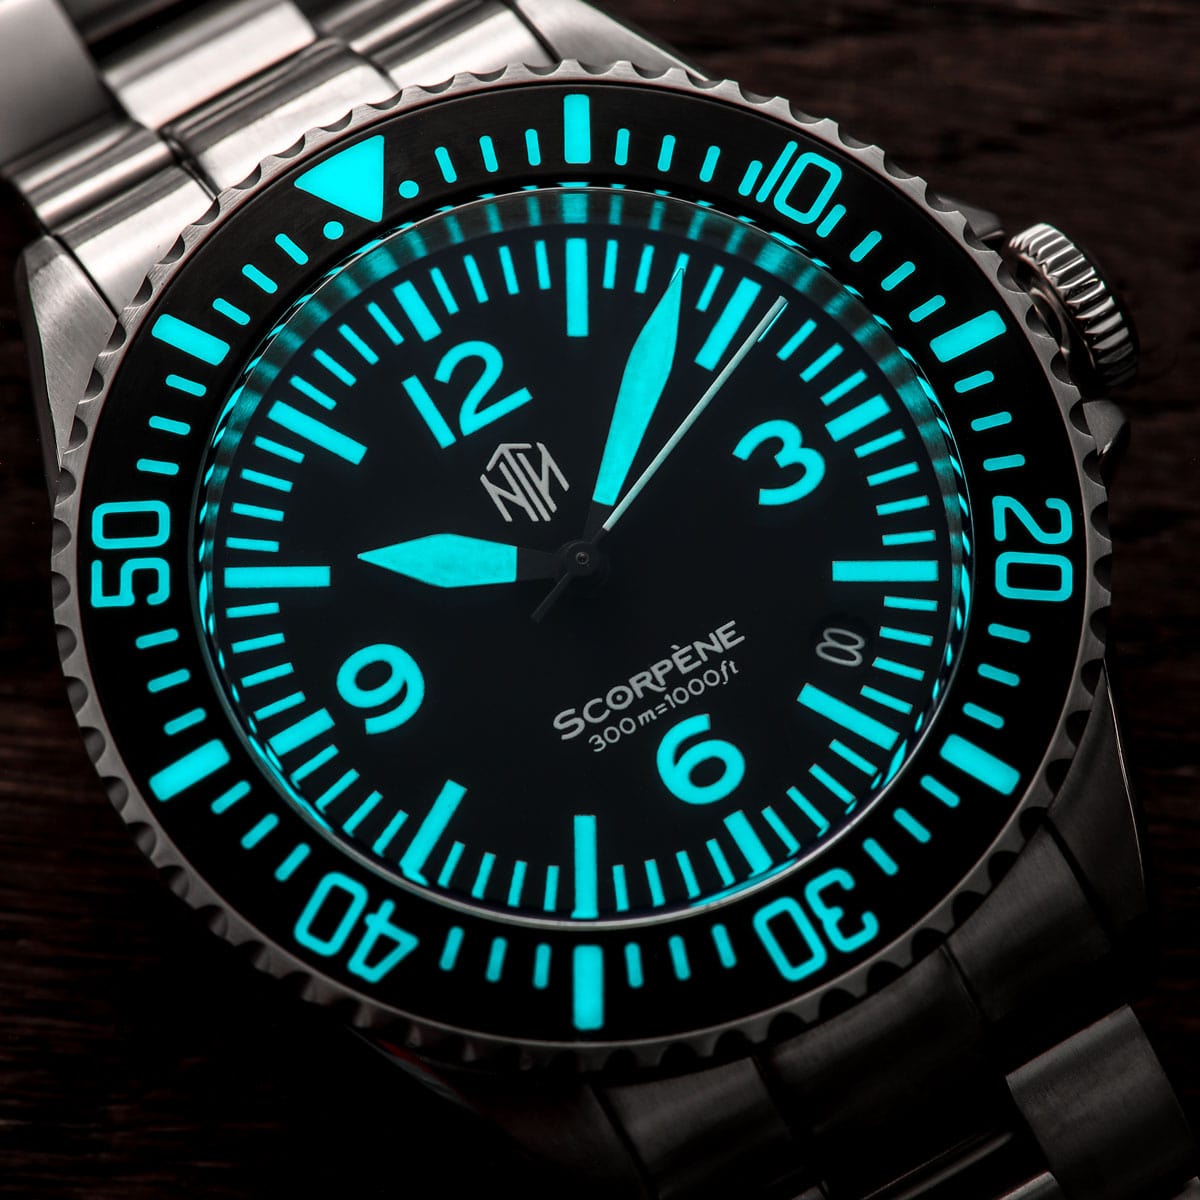 NTH Scorpène Dive watch - Oyster Bracelet - No Date